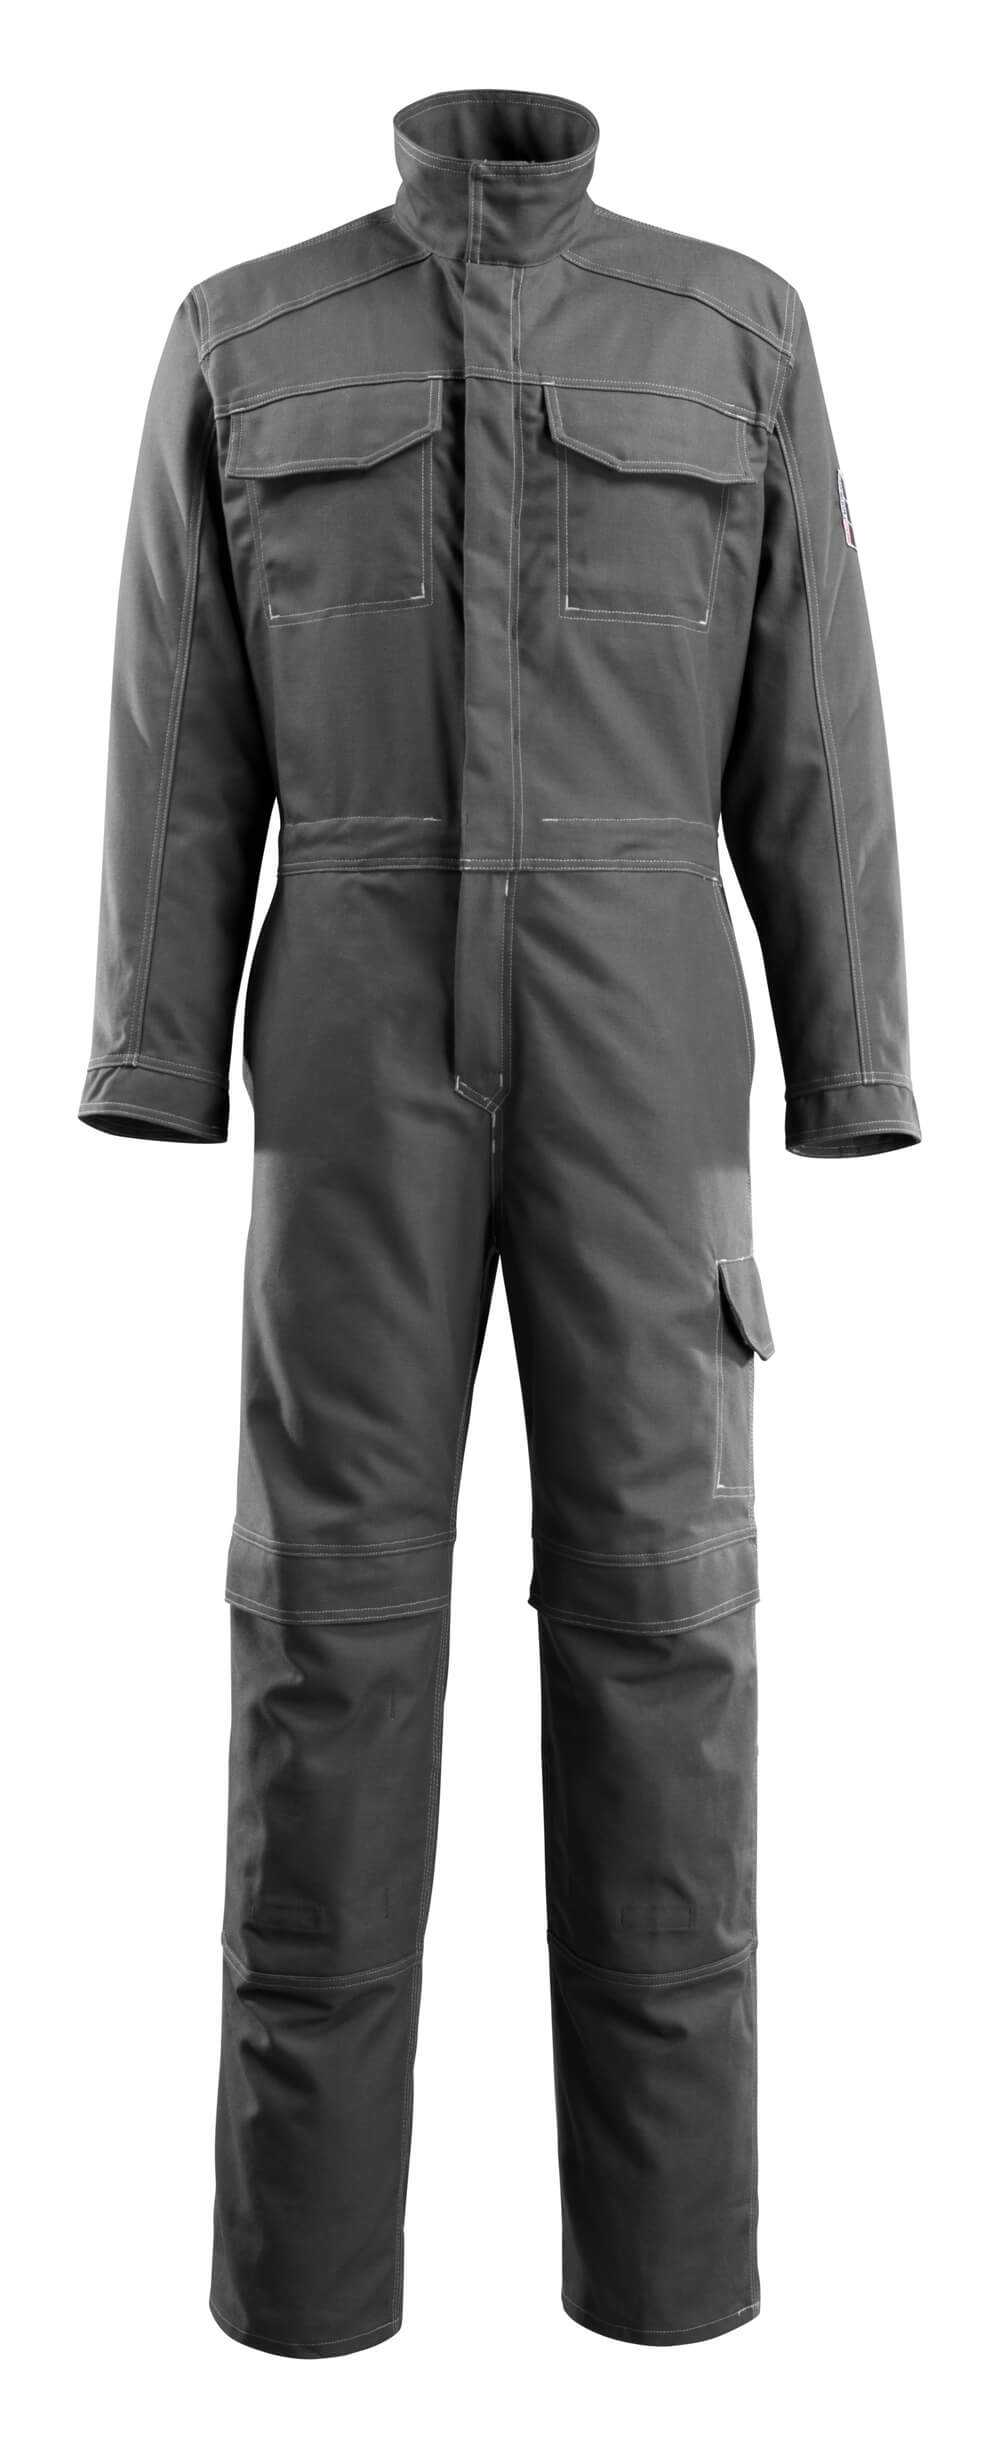 MASCOT®MULTISAFE Boilersuit with kneepad pockets Baar 6619 - DaltonSafety